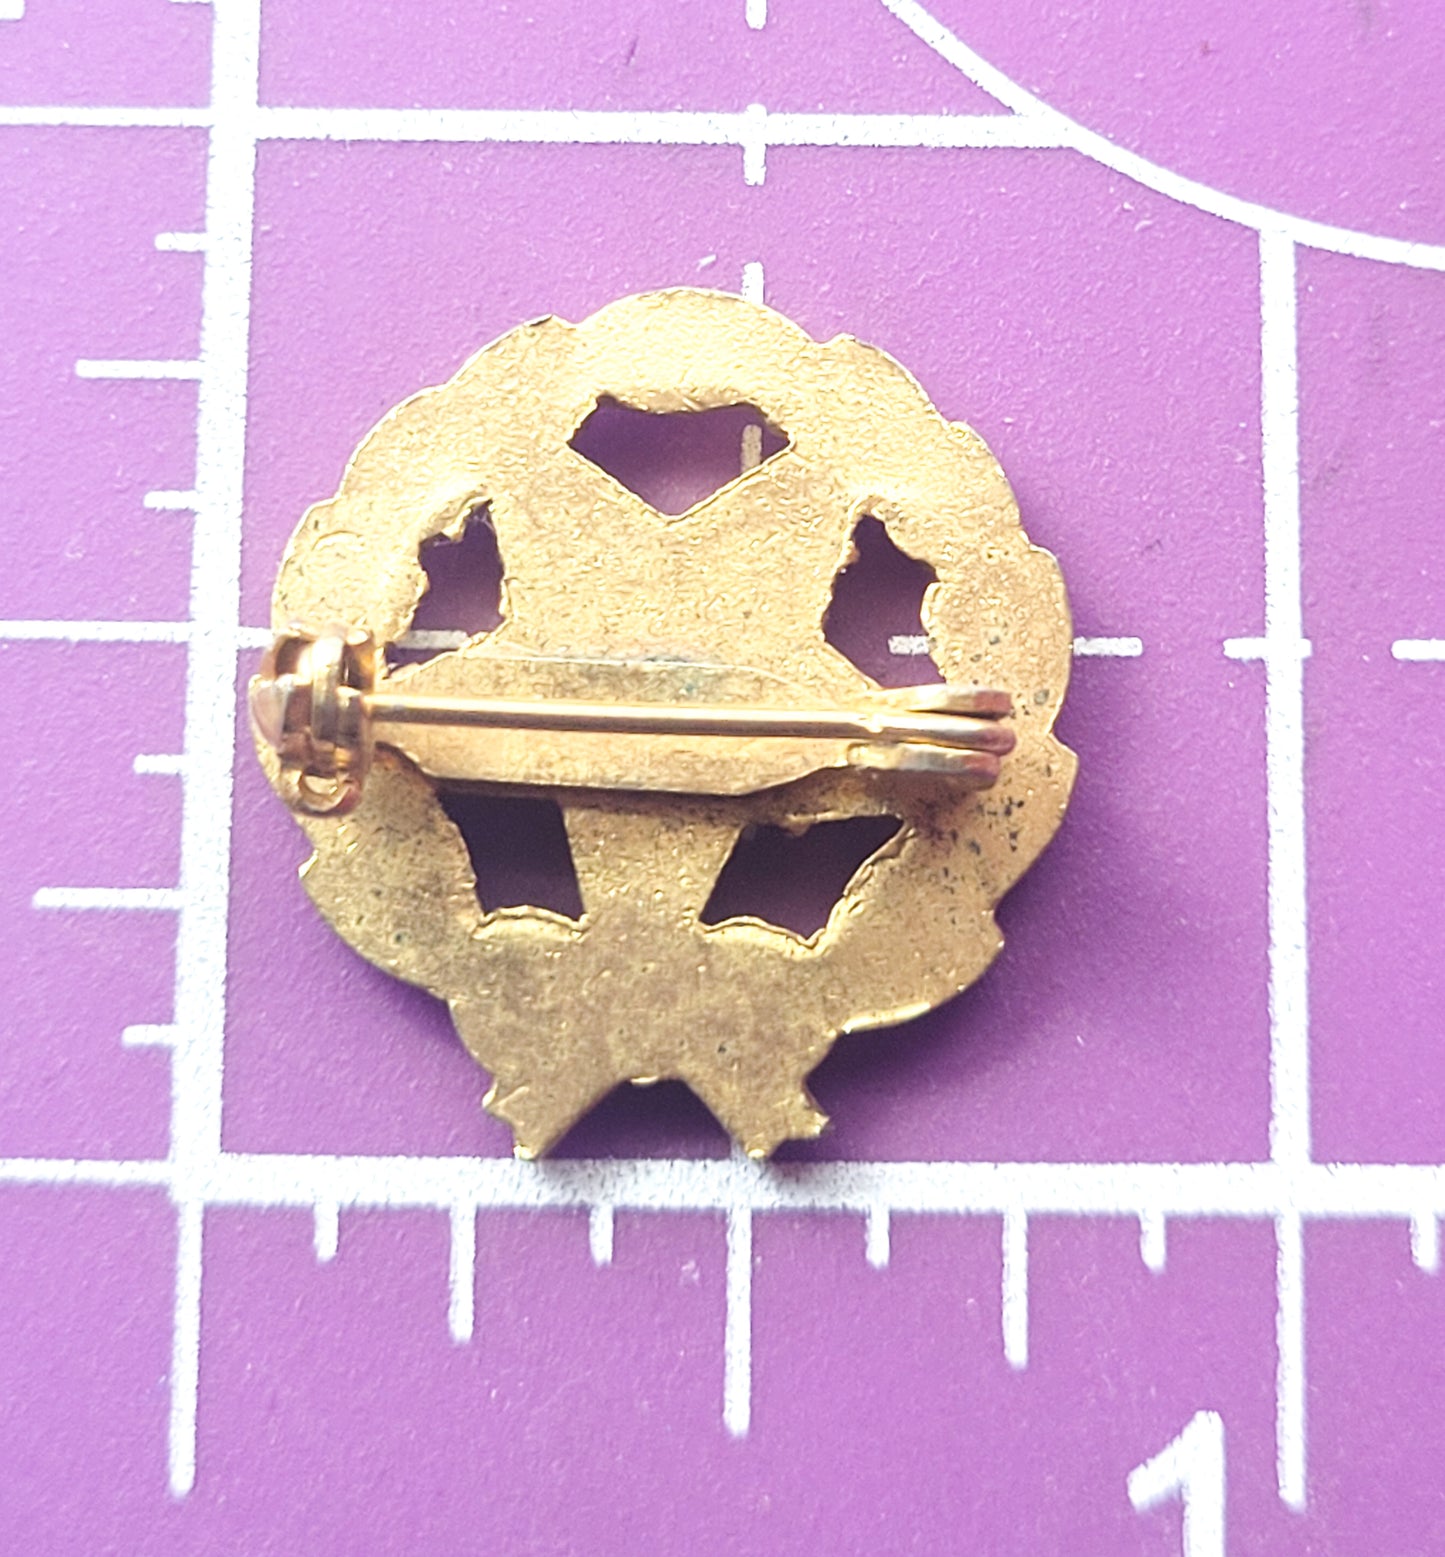 Order of the Eastern Star Masonic gold tone enamel 25 year vintage brooch